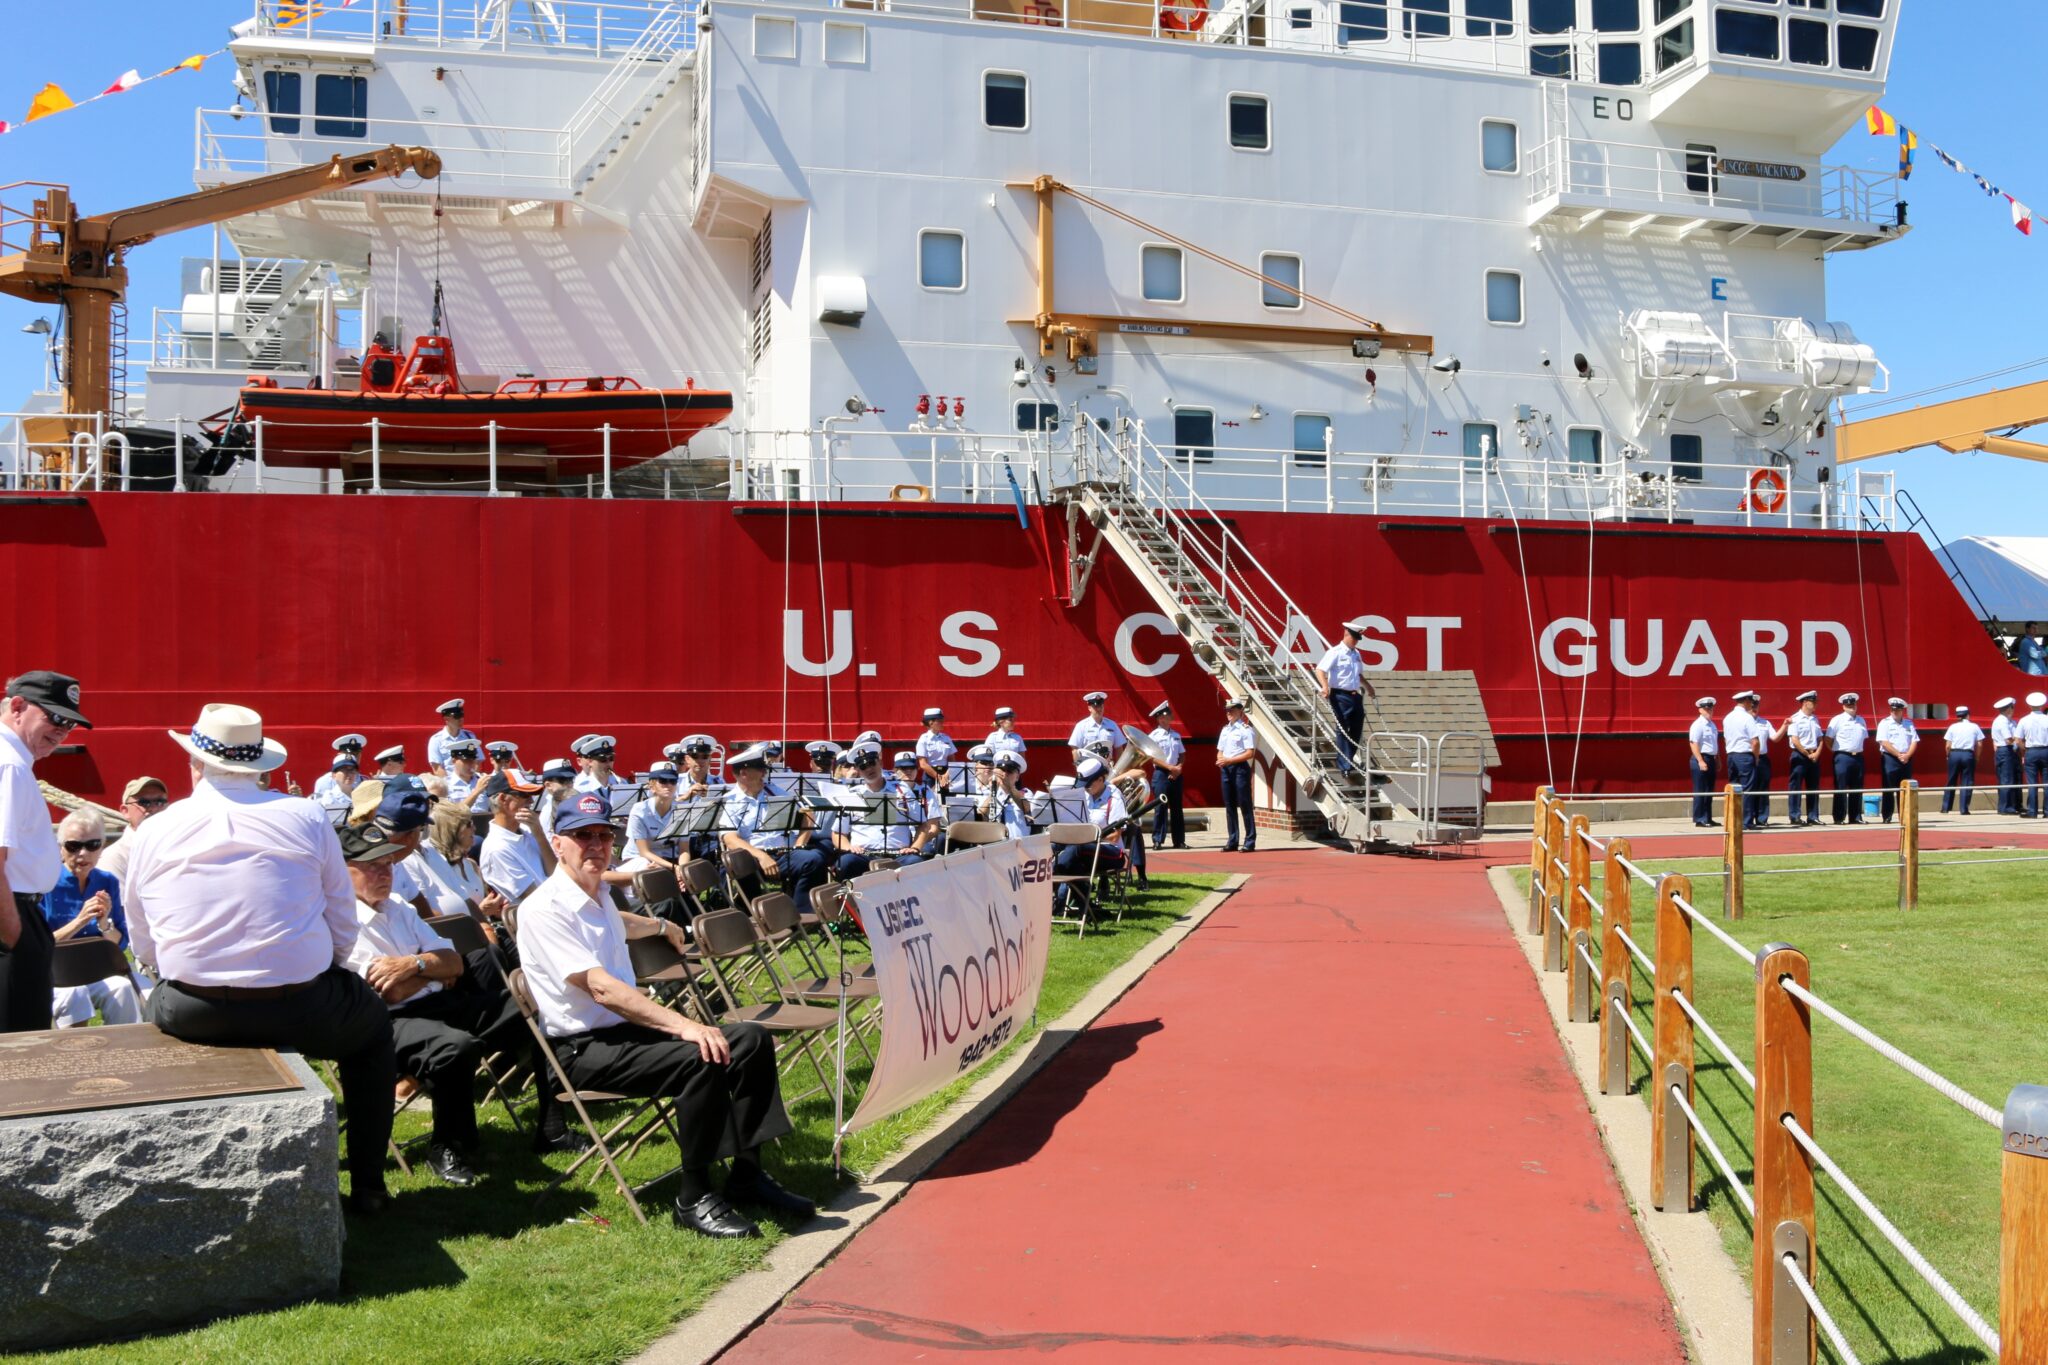 National Memorial Service The Grand Haven Coast Guard Festival